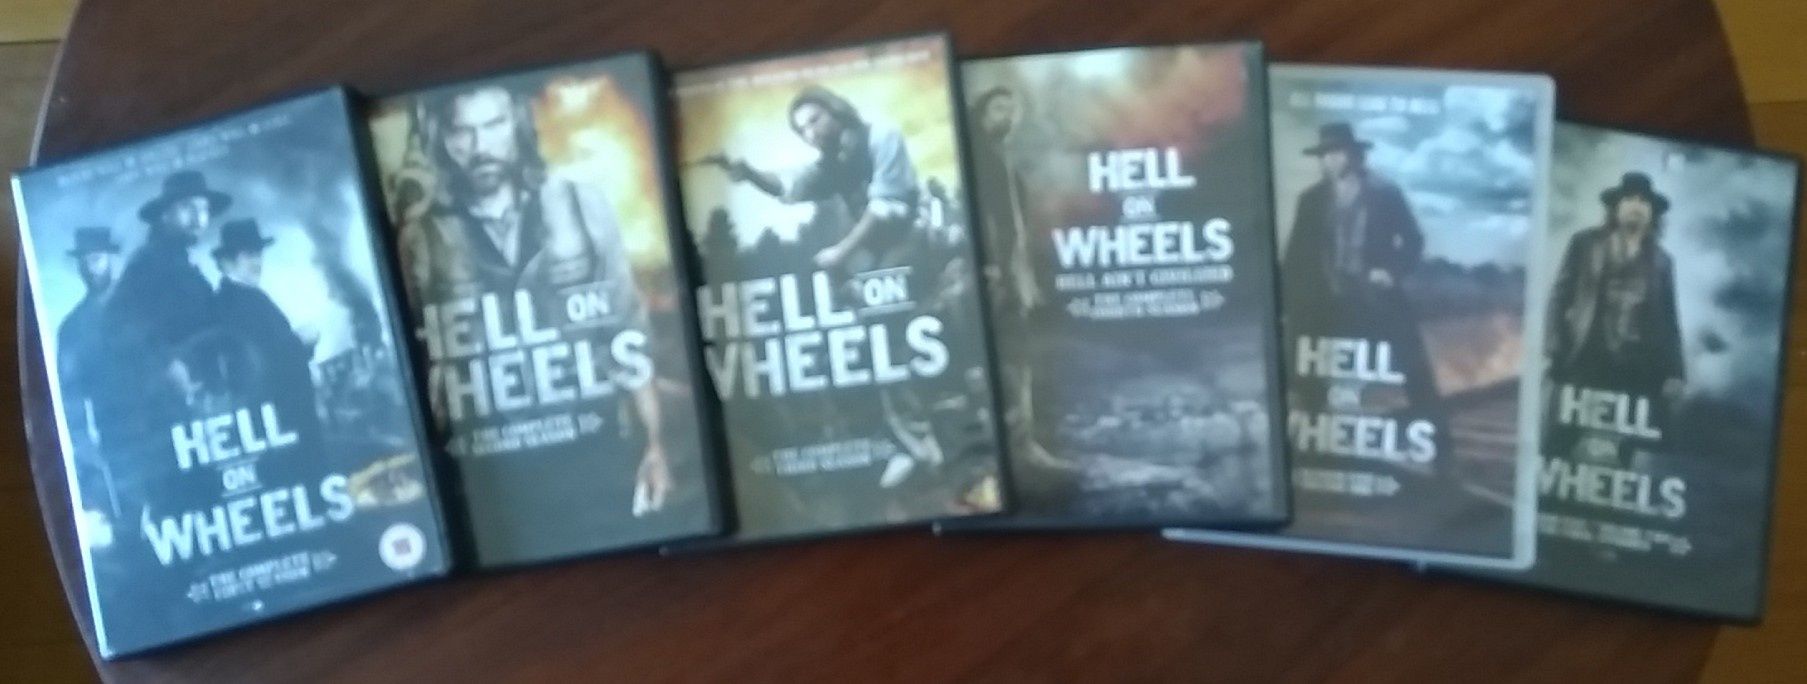 Inferno Sobre Rodas - Hell on Wheels, série completa DVD